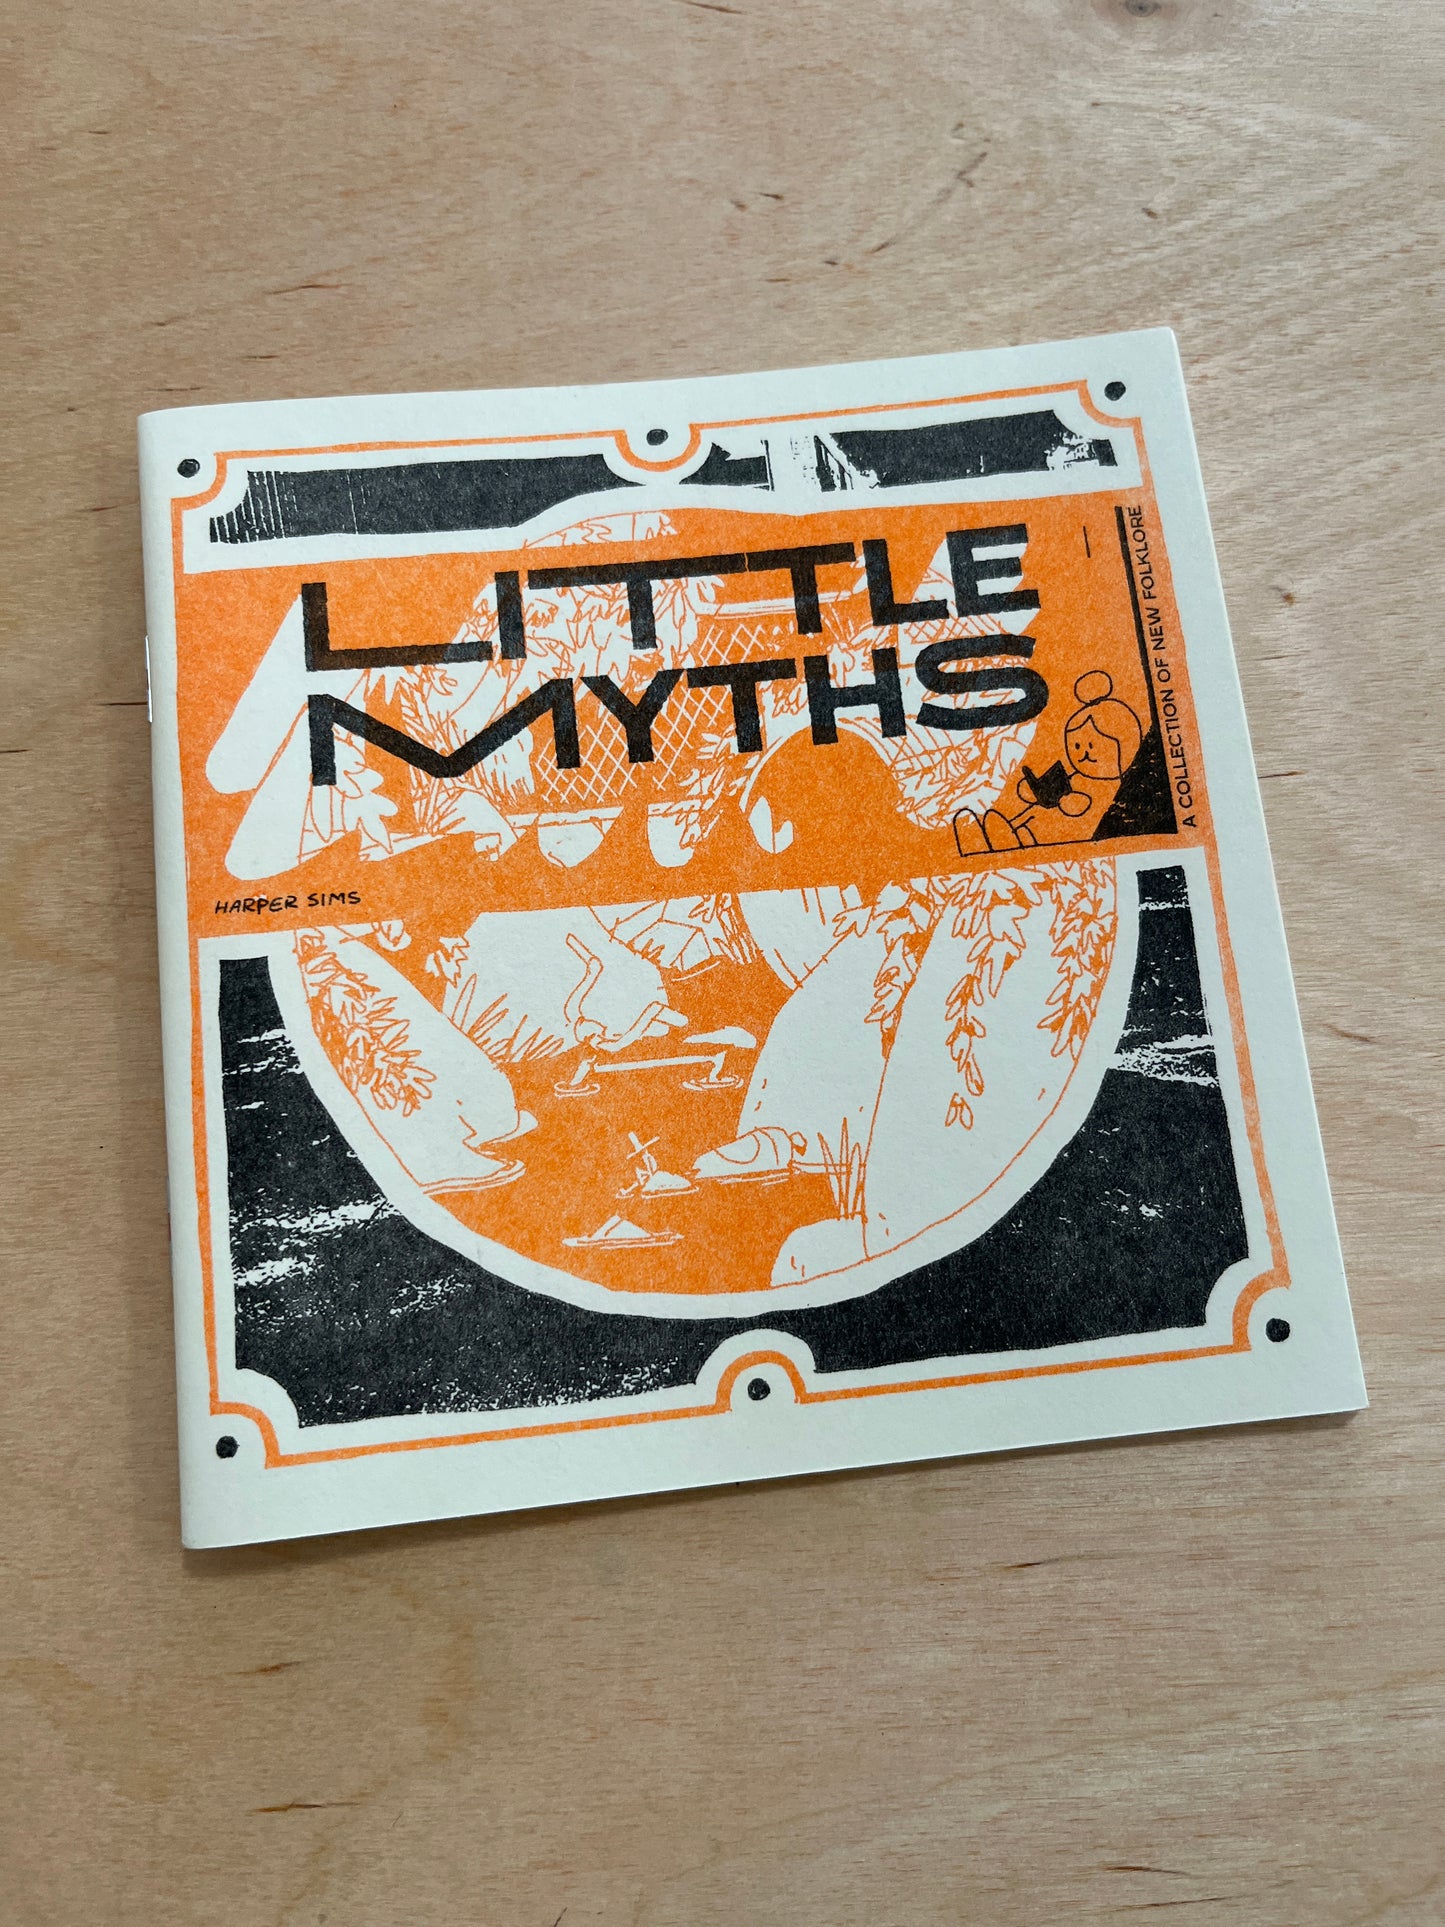 Little Myths